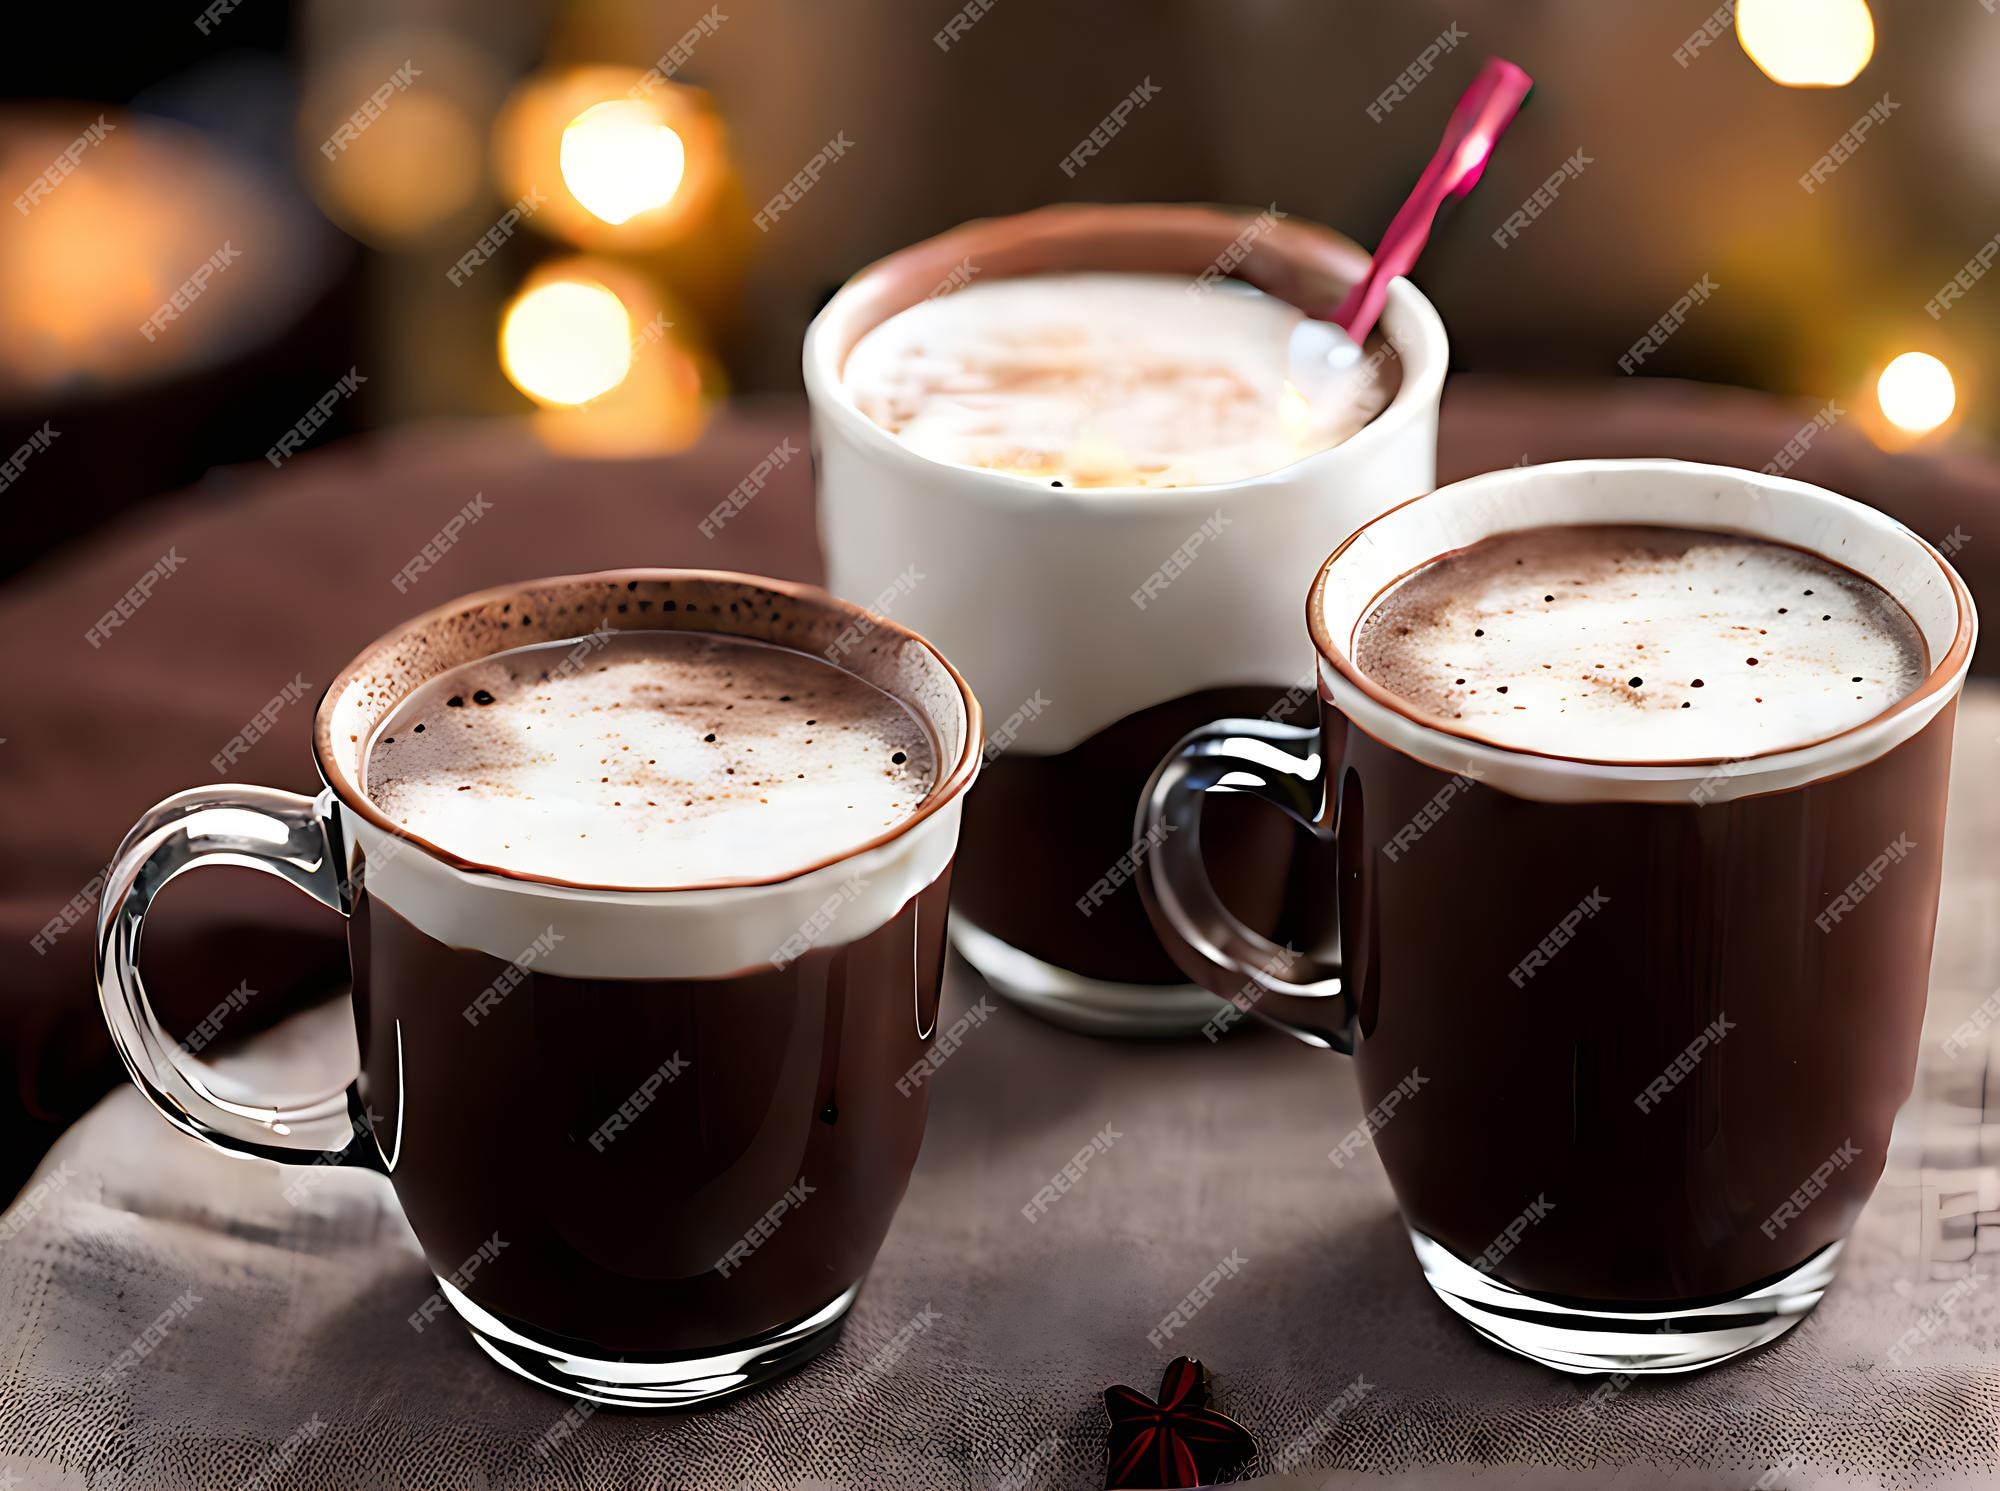 Hot Chocolate Drink Images - Free Download on Freepik